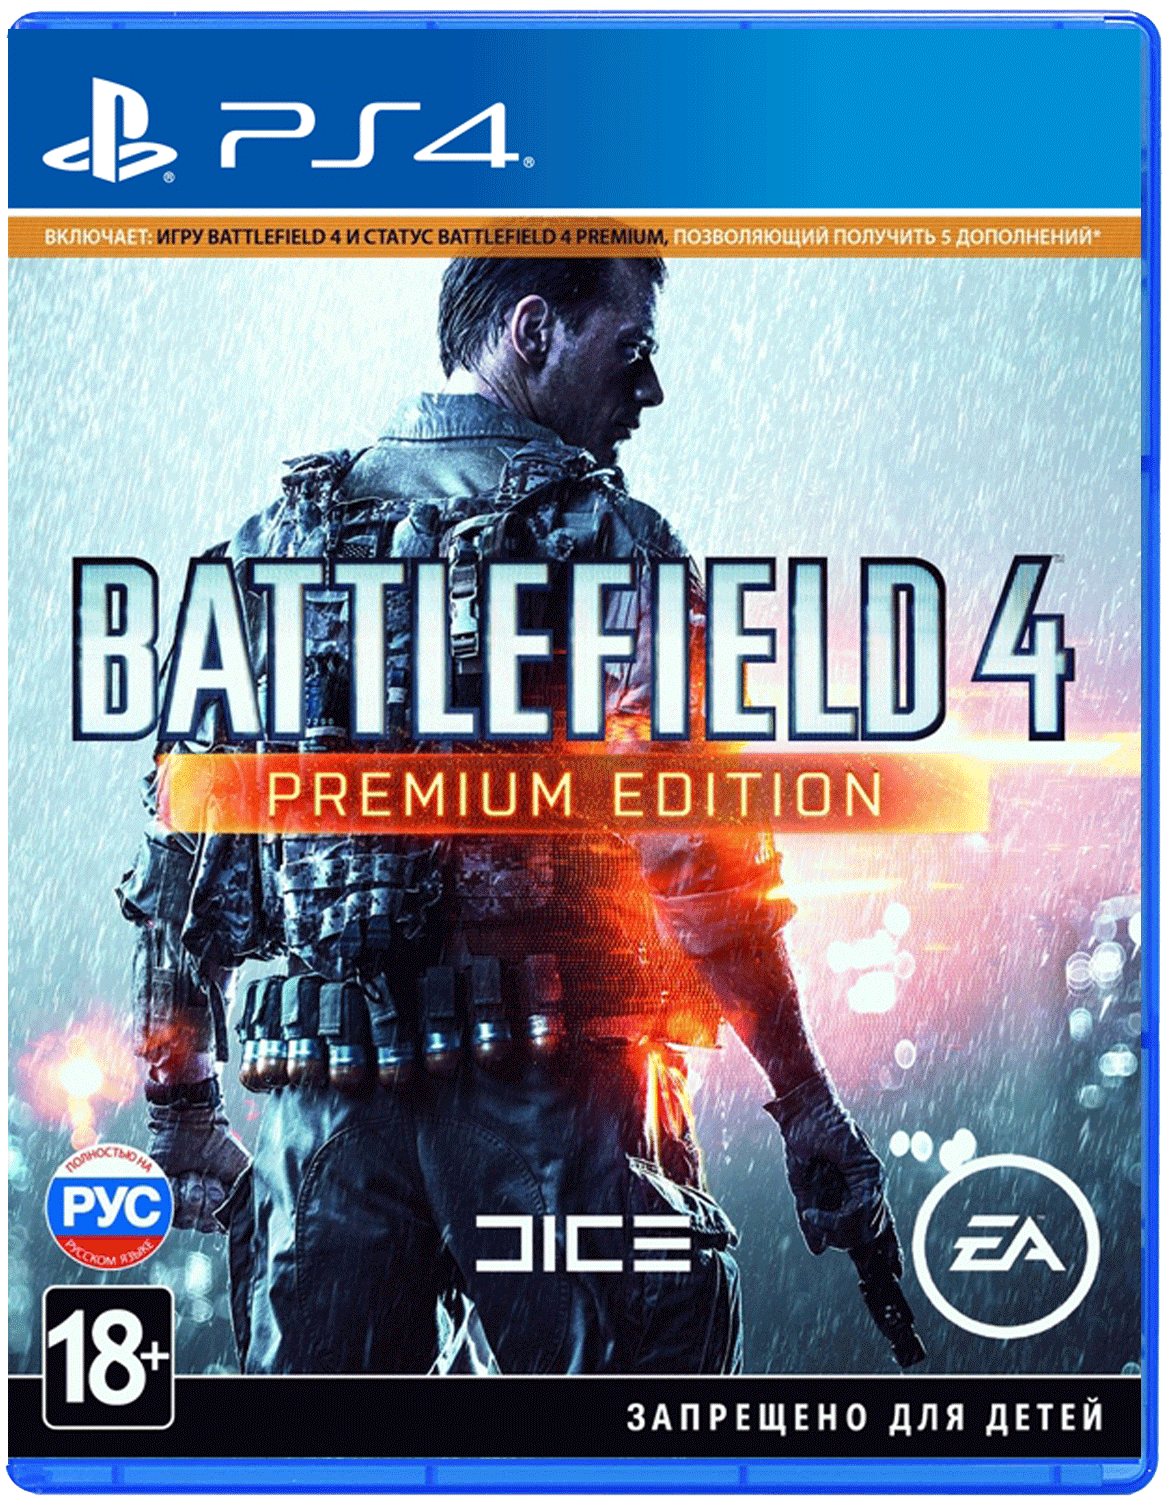 Ps4 игра на телефоне. Battlefield 4 Premium Edition ps4. Battlefield 4 ps4 диск. Диск для ps4 Battlefield 4 Premium Edition. Battlefield ps4 игры на ps4.